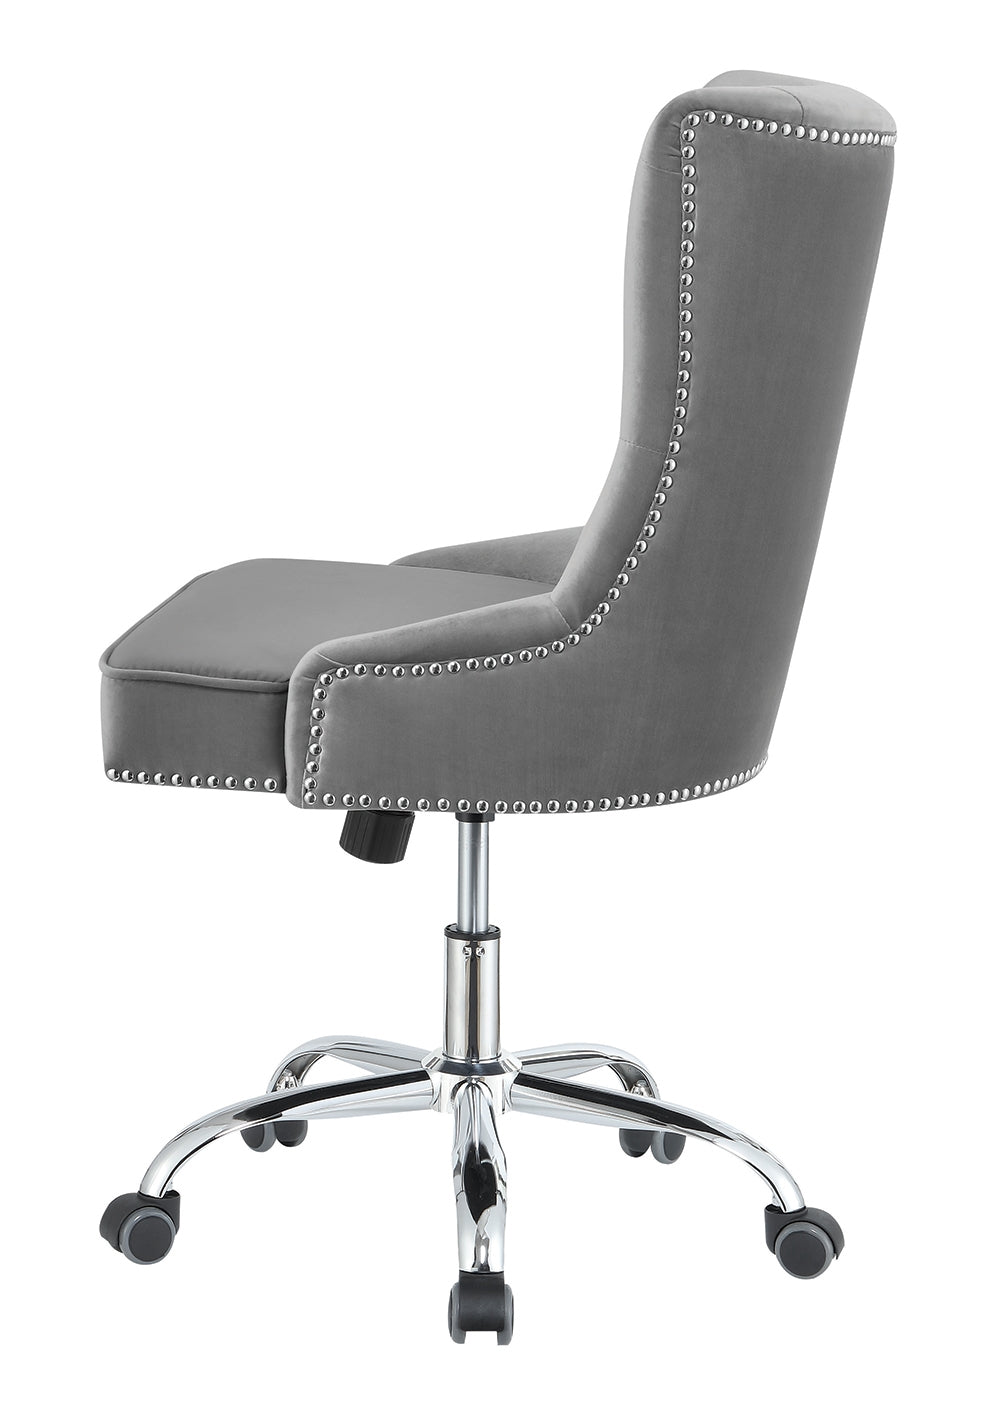 Targa Blue Grey Office Chair with Chrome Accent Trim